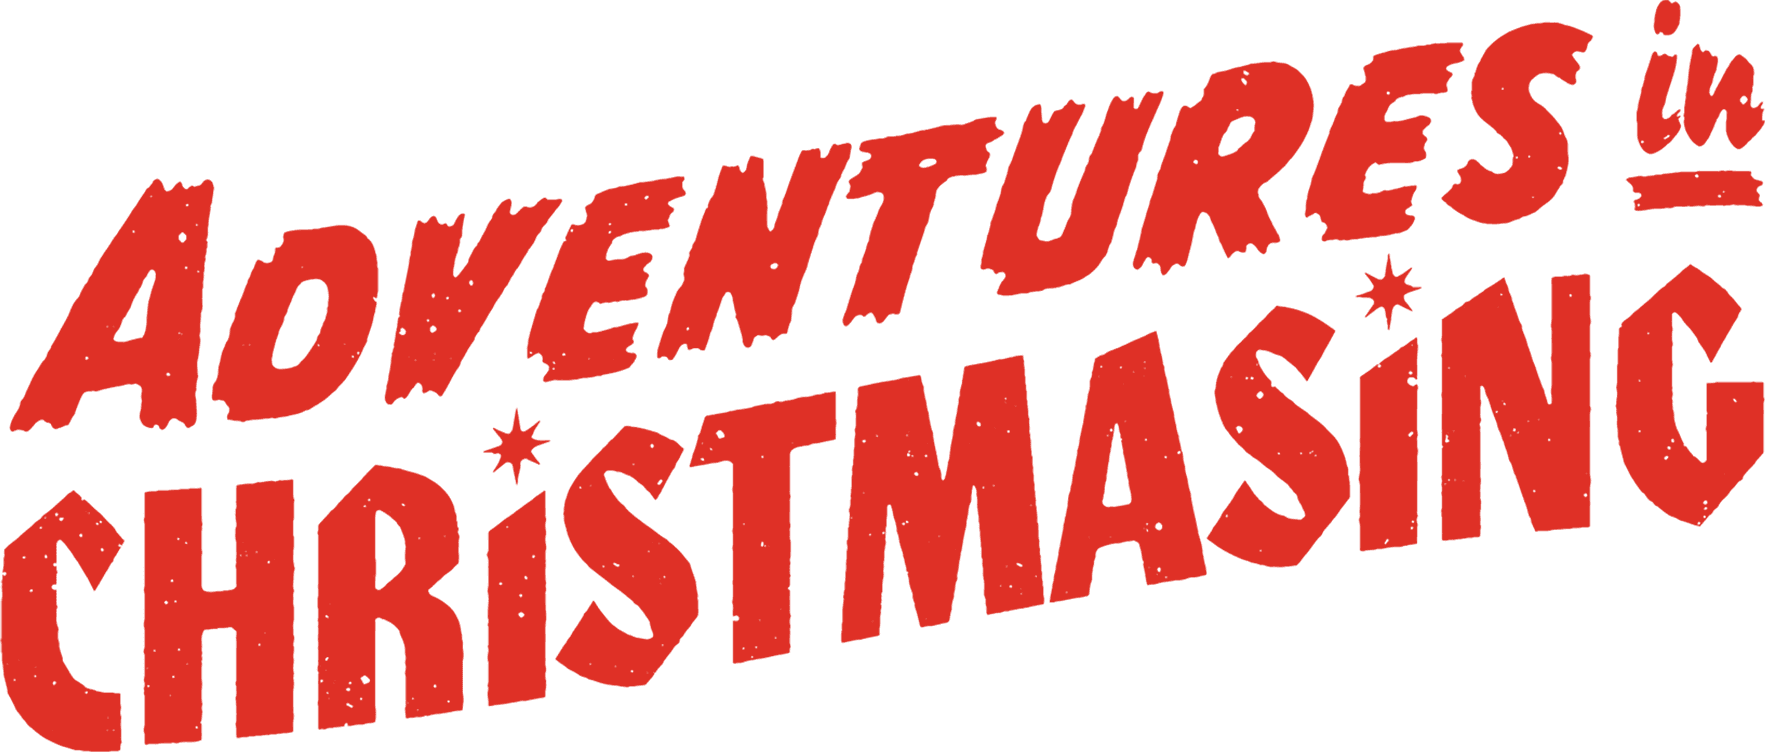 Adventures In Christmasing logo